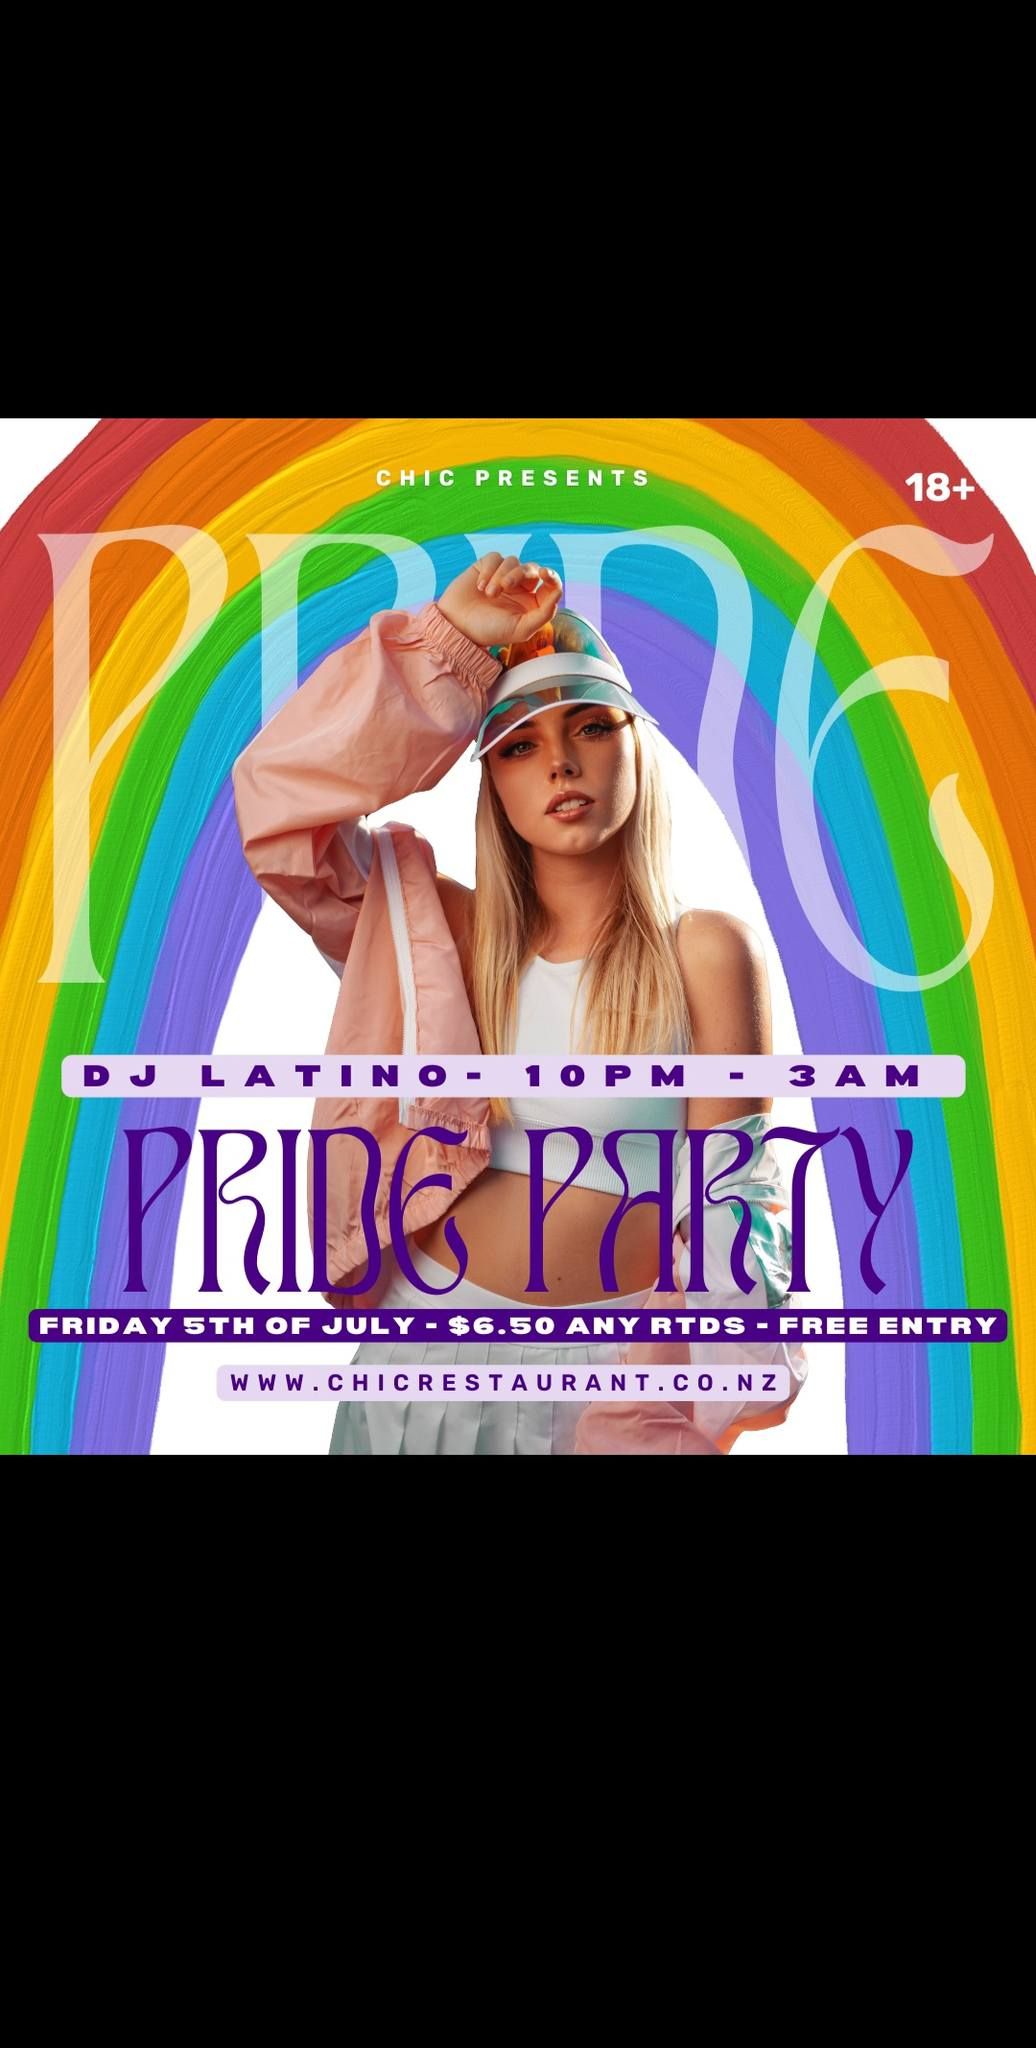 Chic's Presents Pride Party 